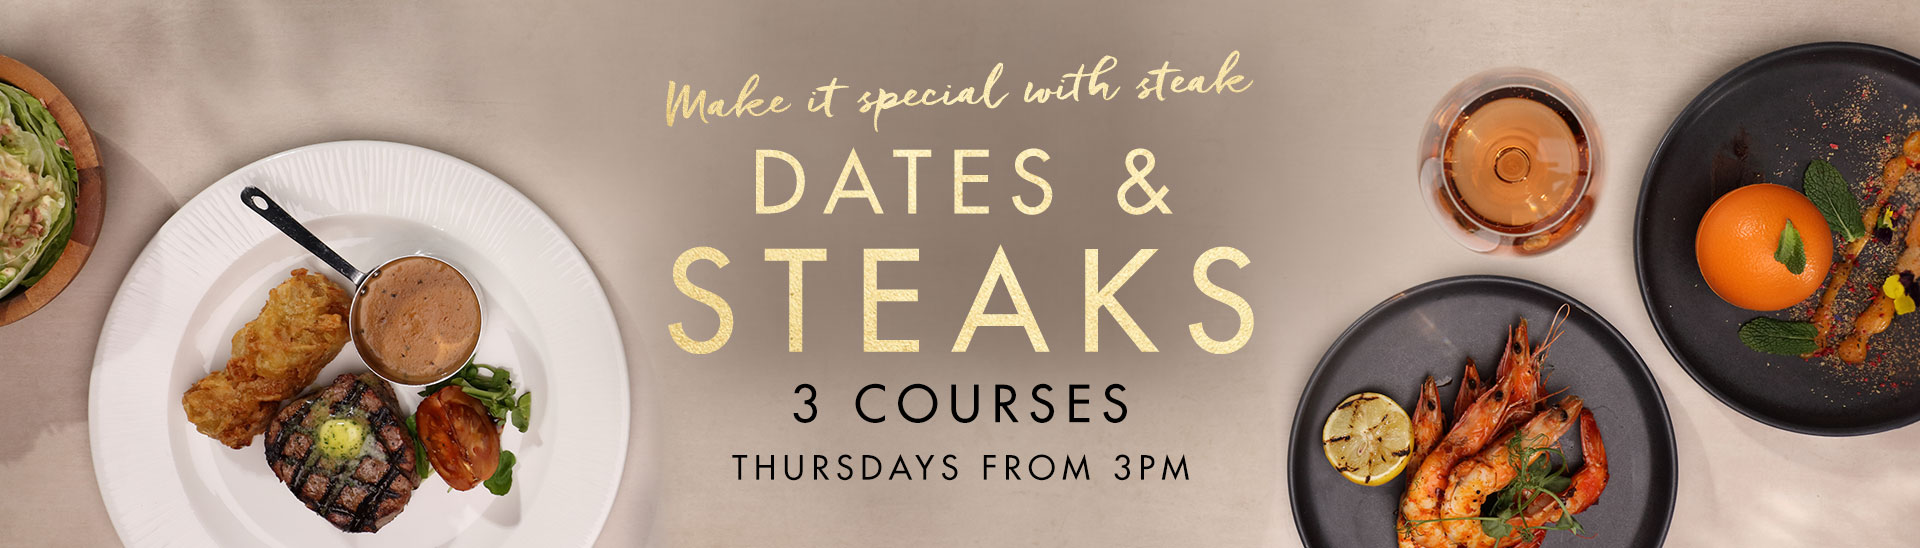 Dates & Steaks at Miller & Carter Bromley